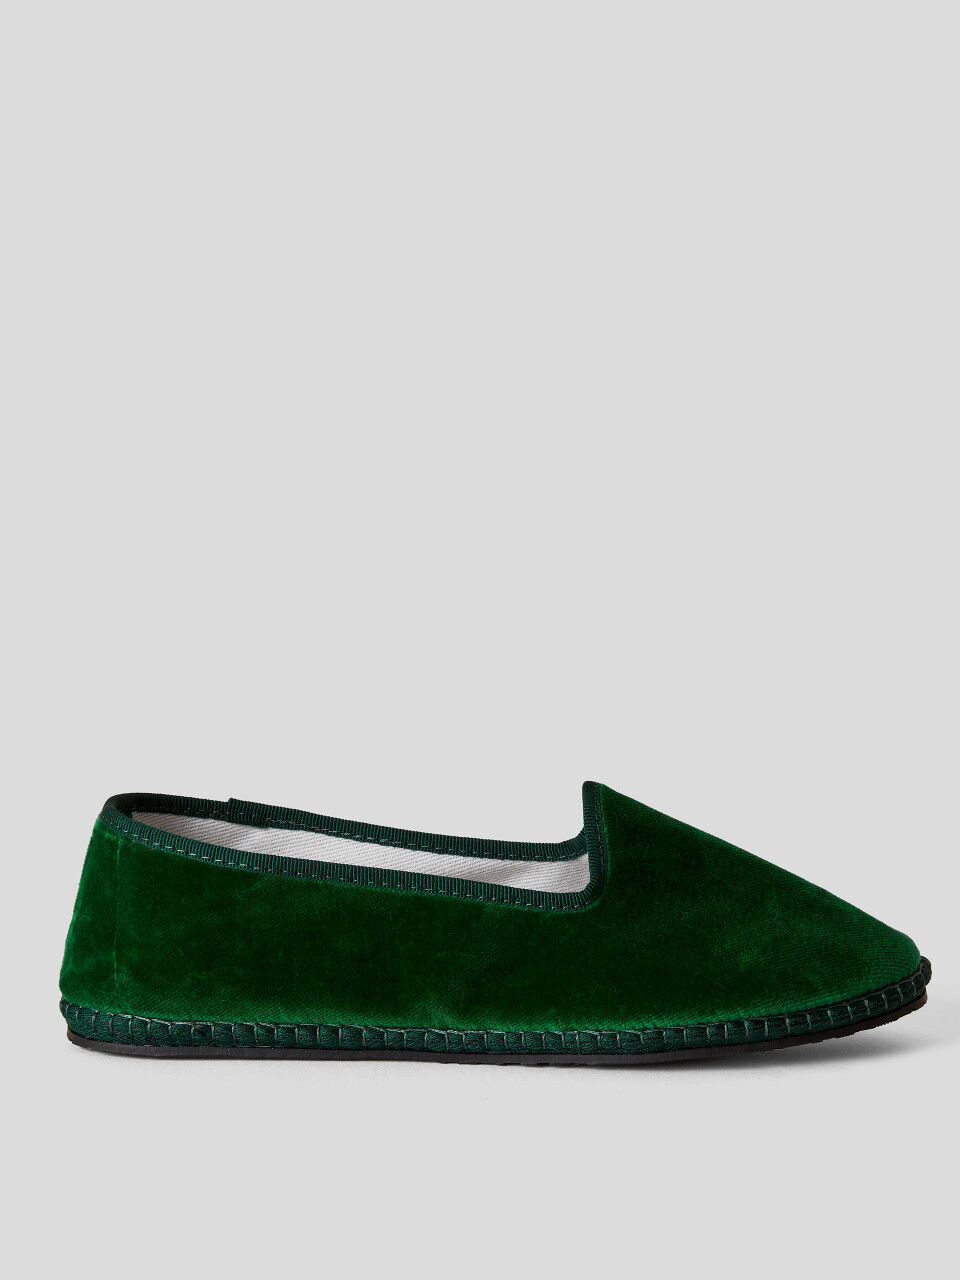 Sapatos Friulane verde-escuro de veludo